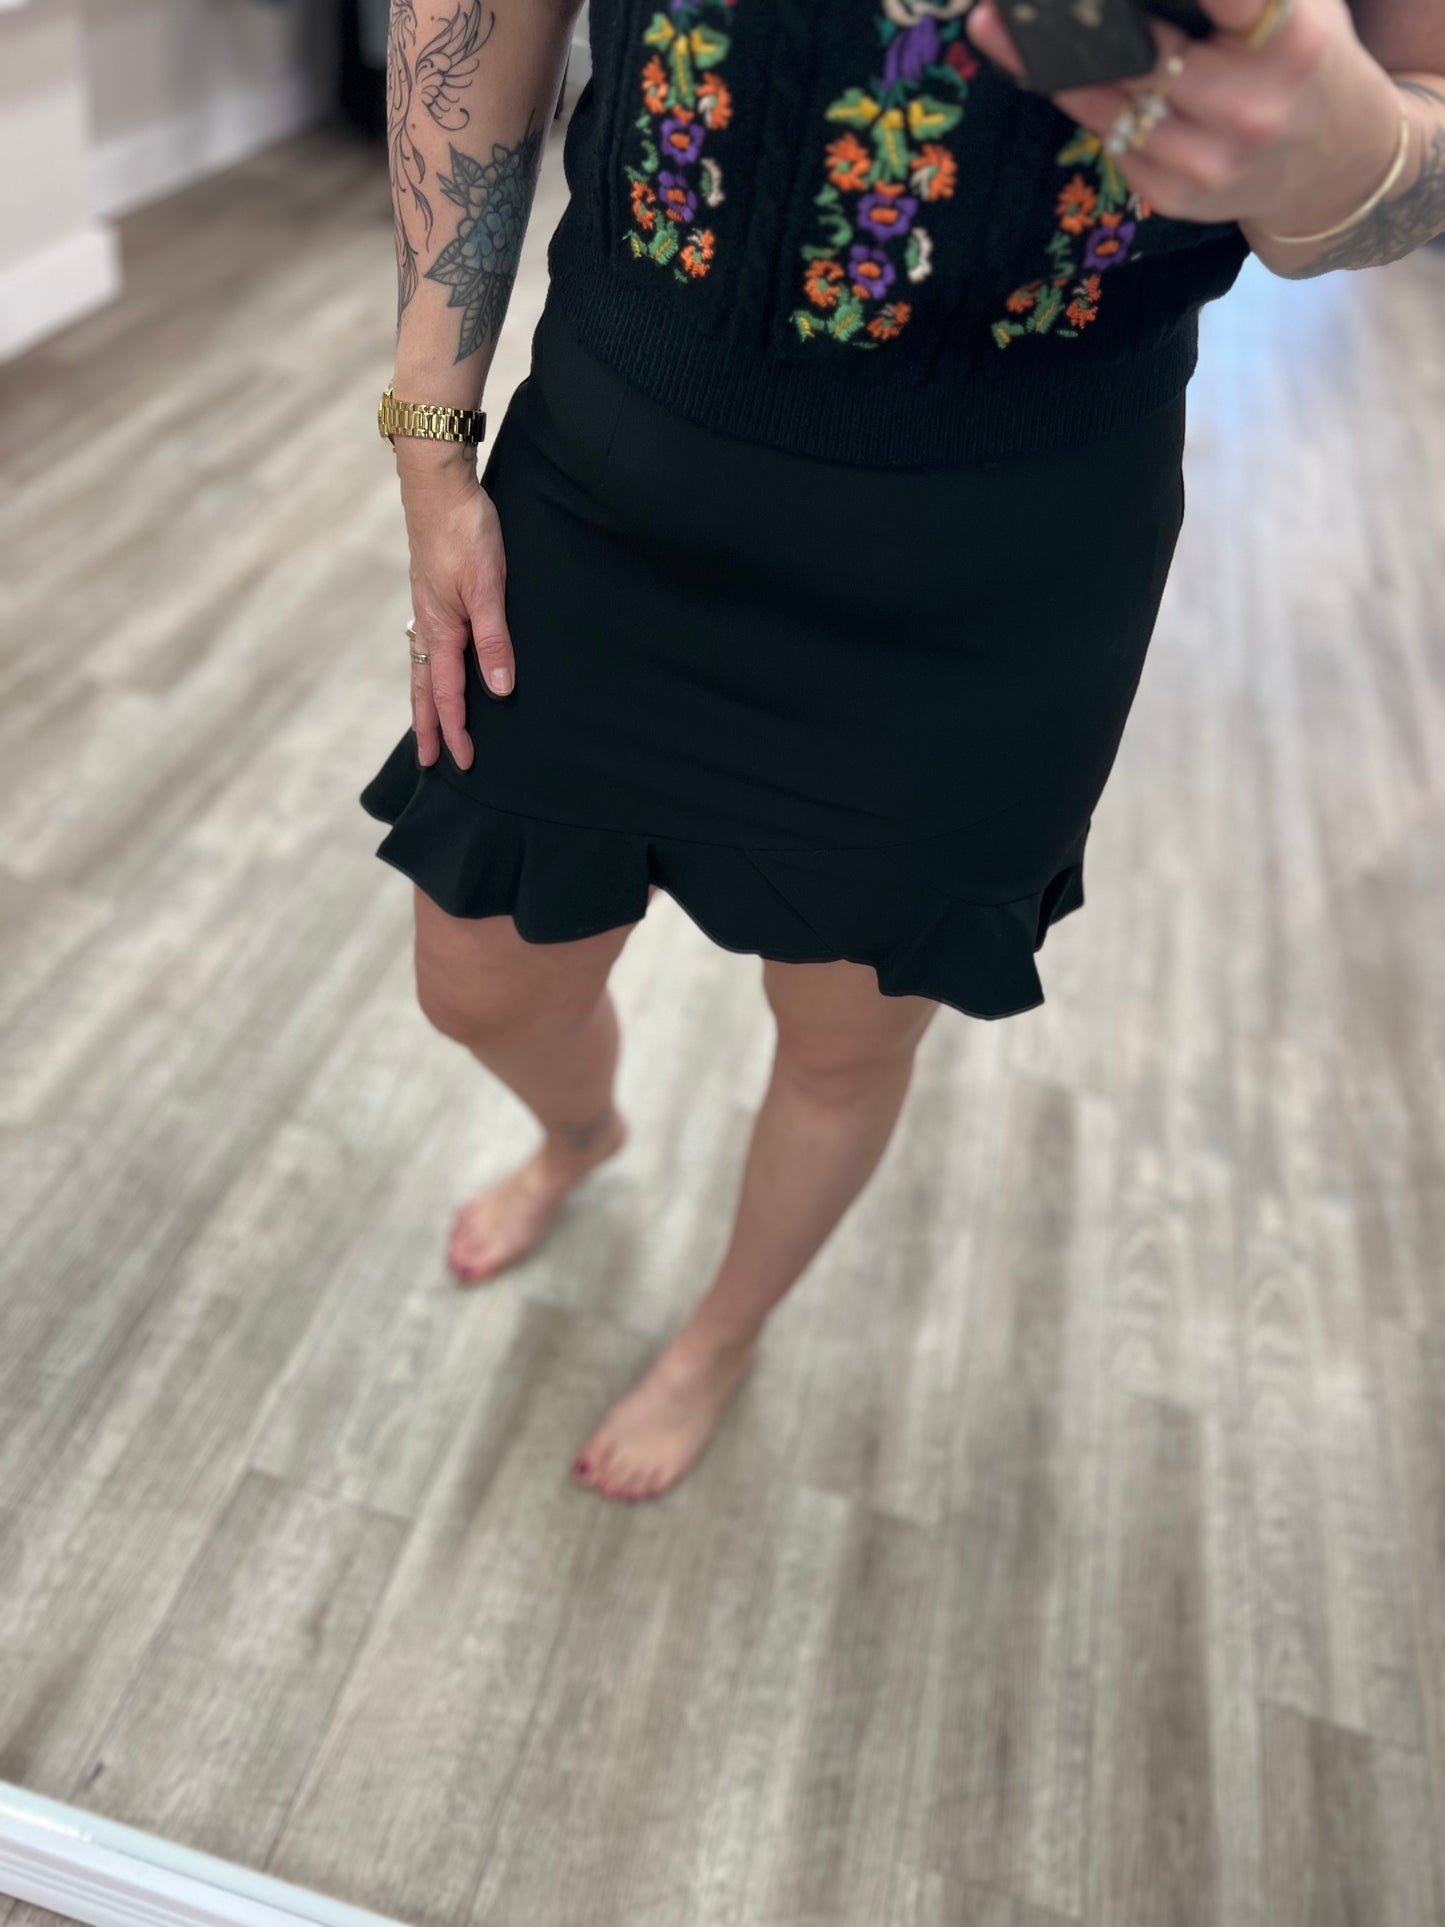 Ruffle Hem Mini Skirt in Black